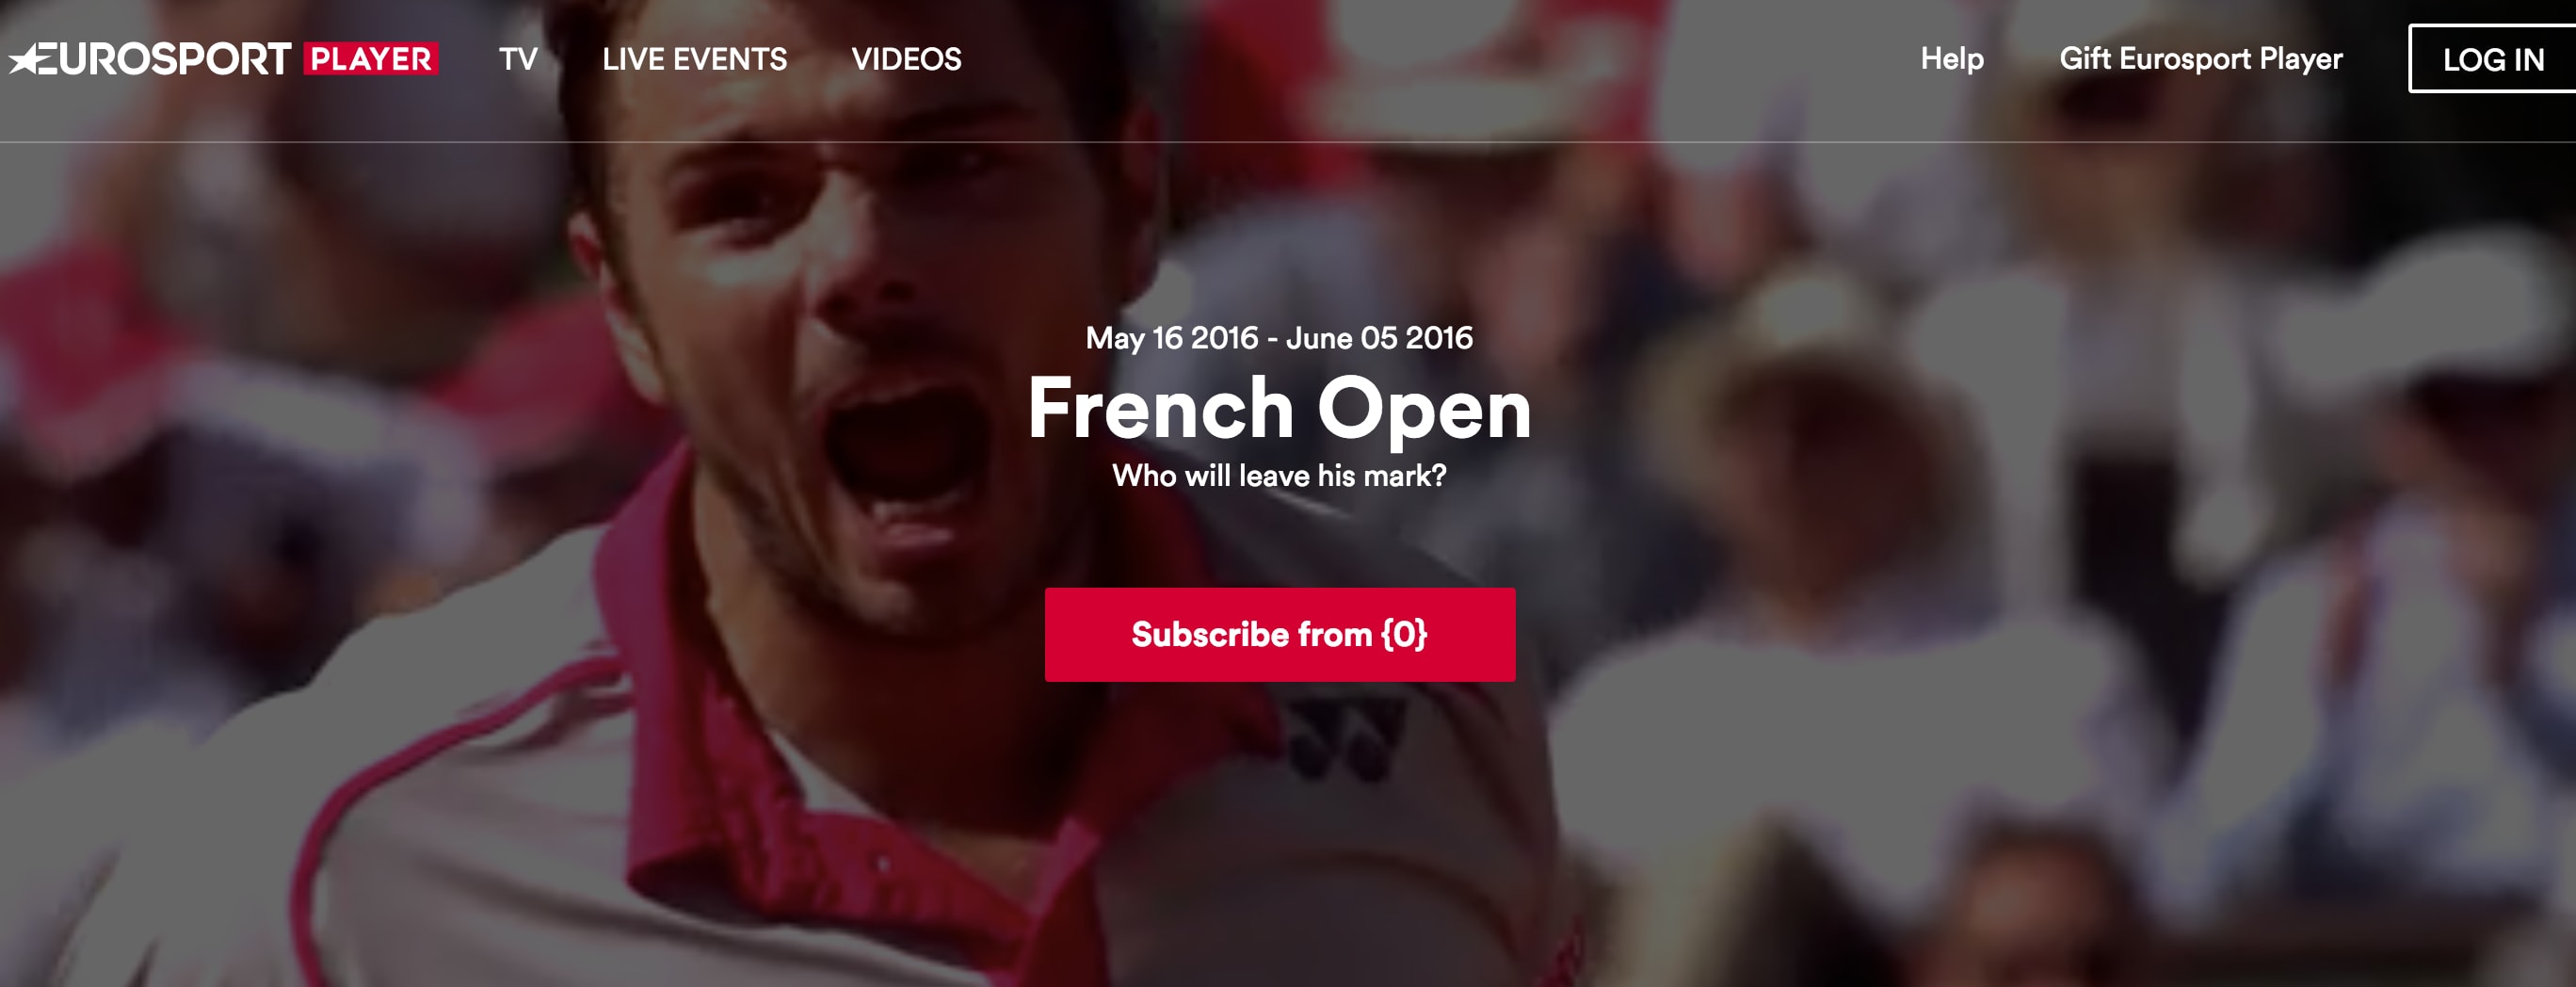 Stream French Open live on Eurosport